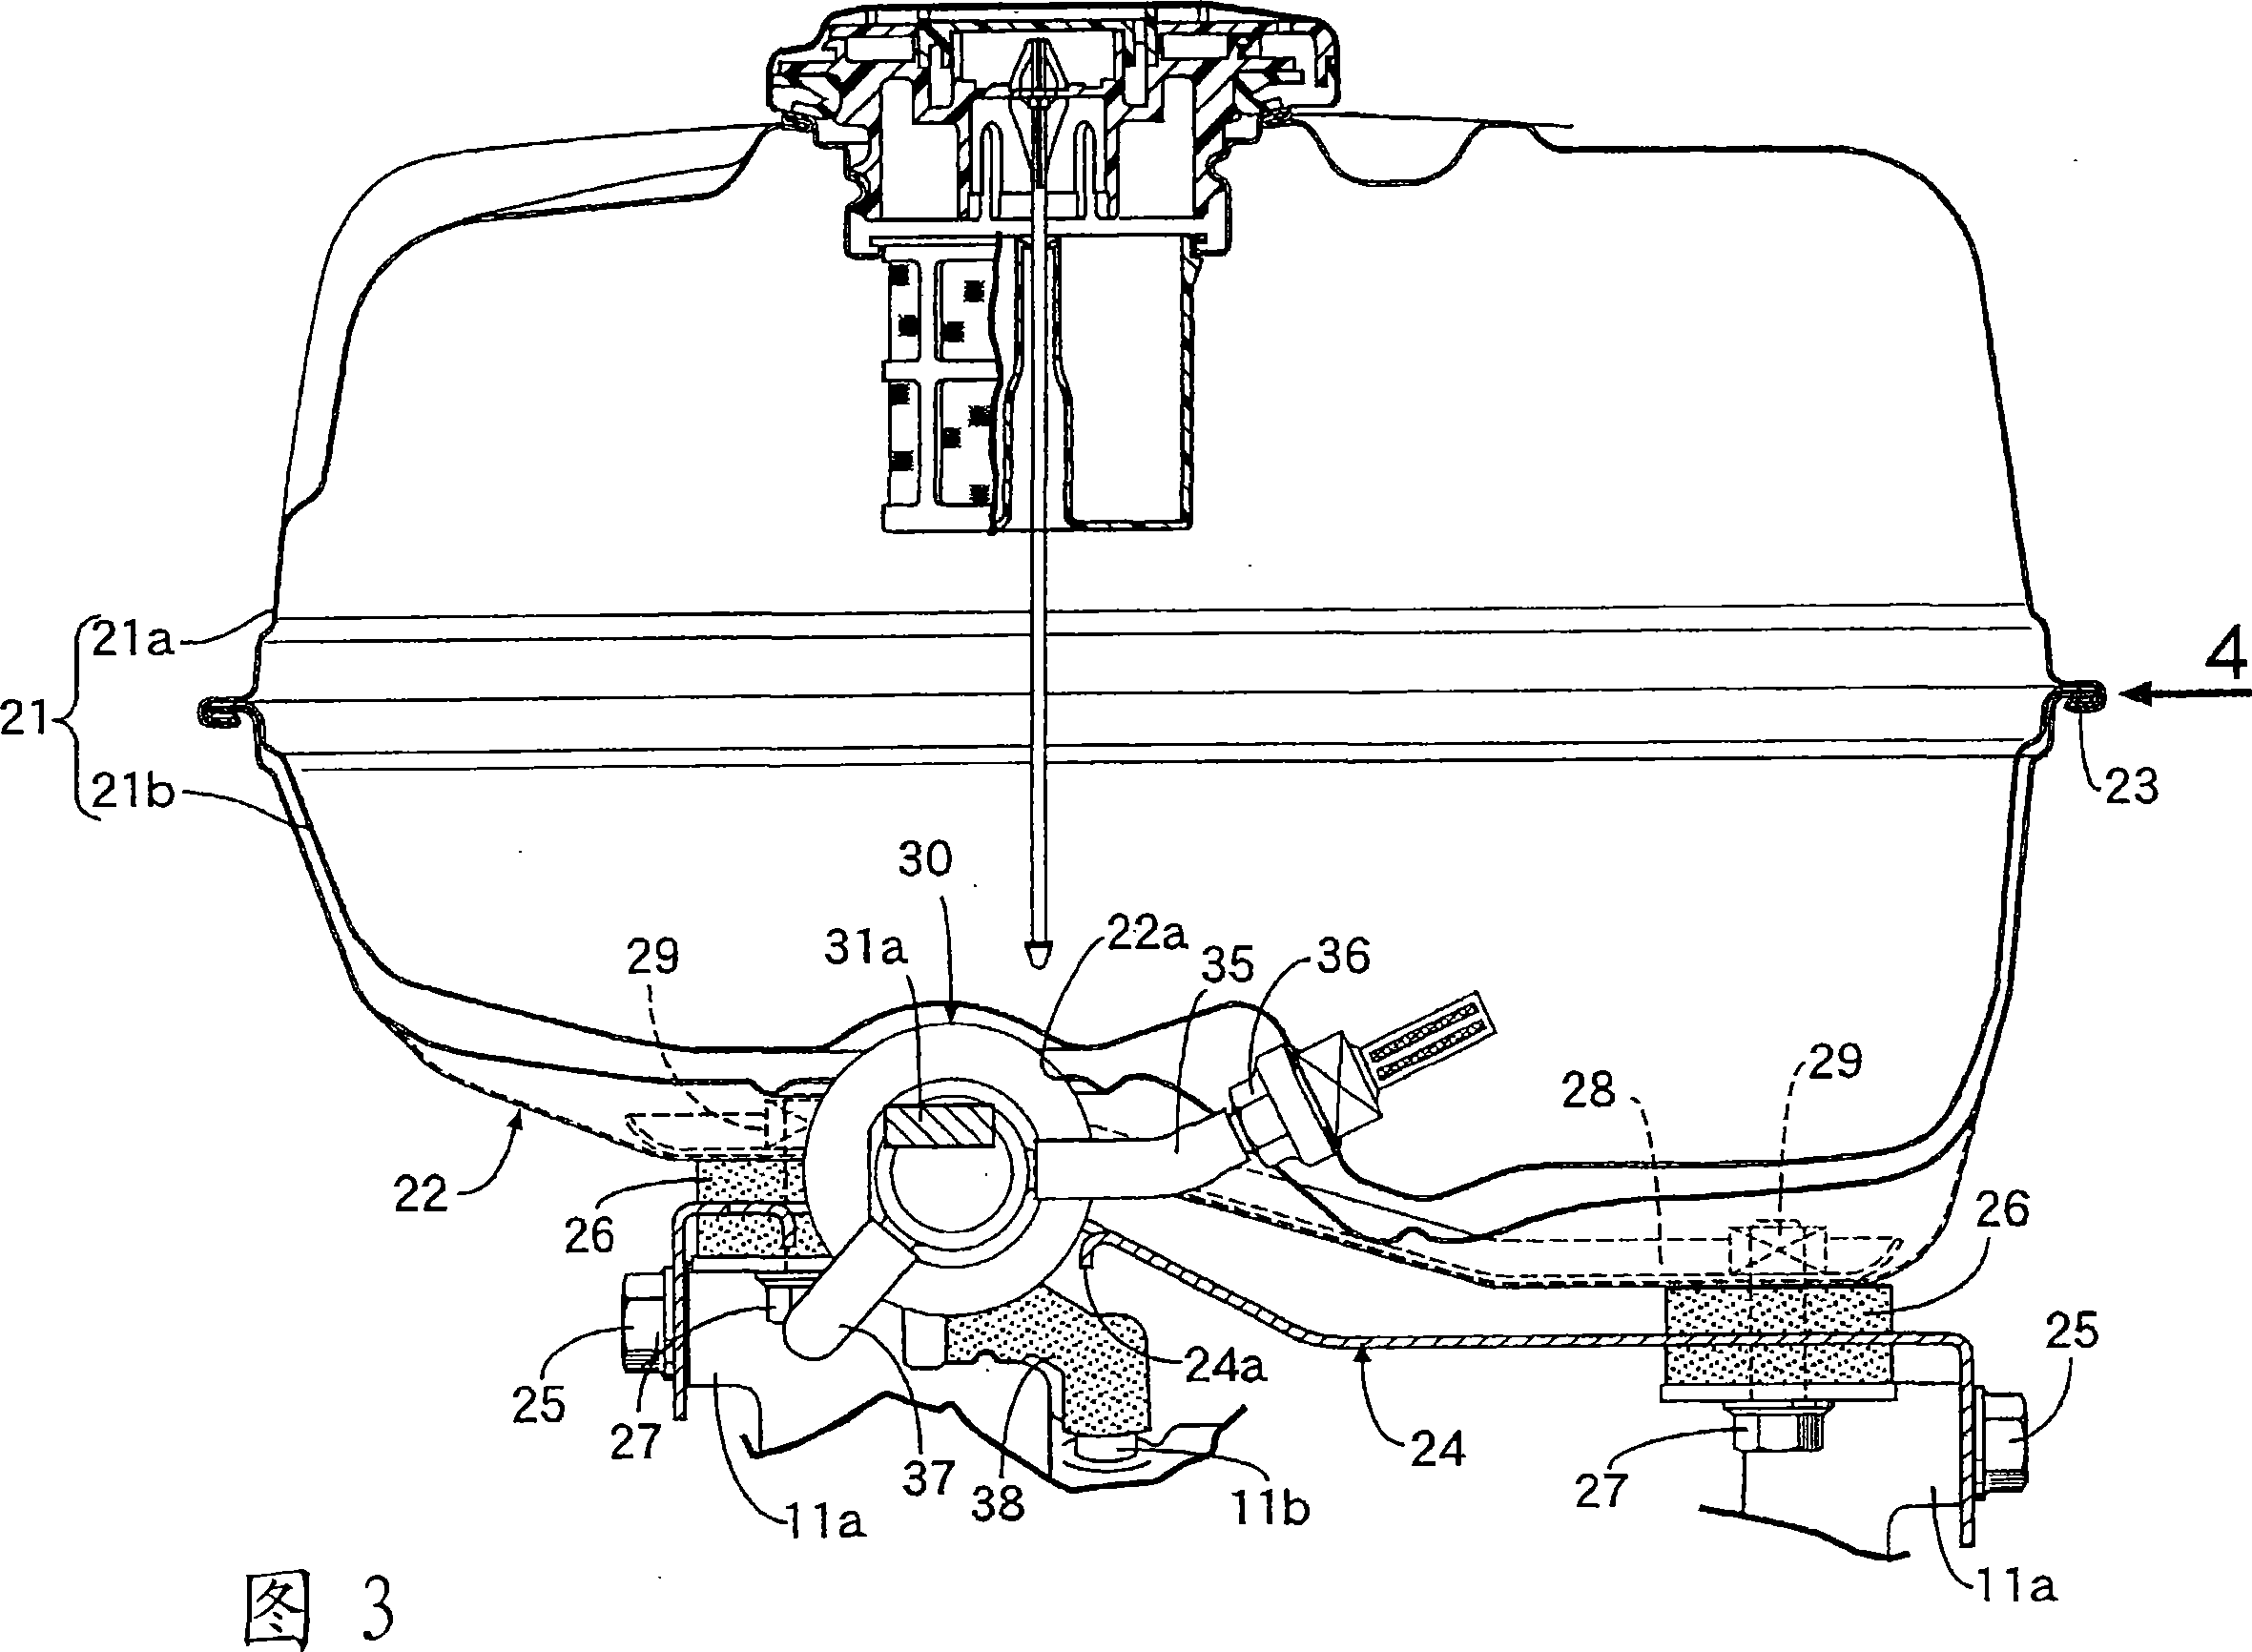 Engine gas-liquid separation device